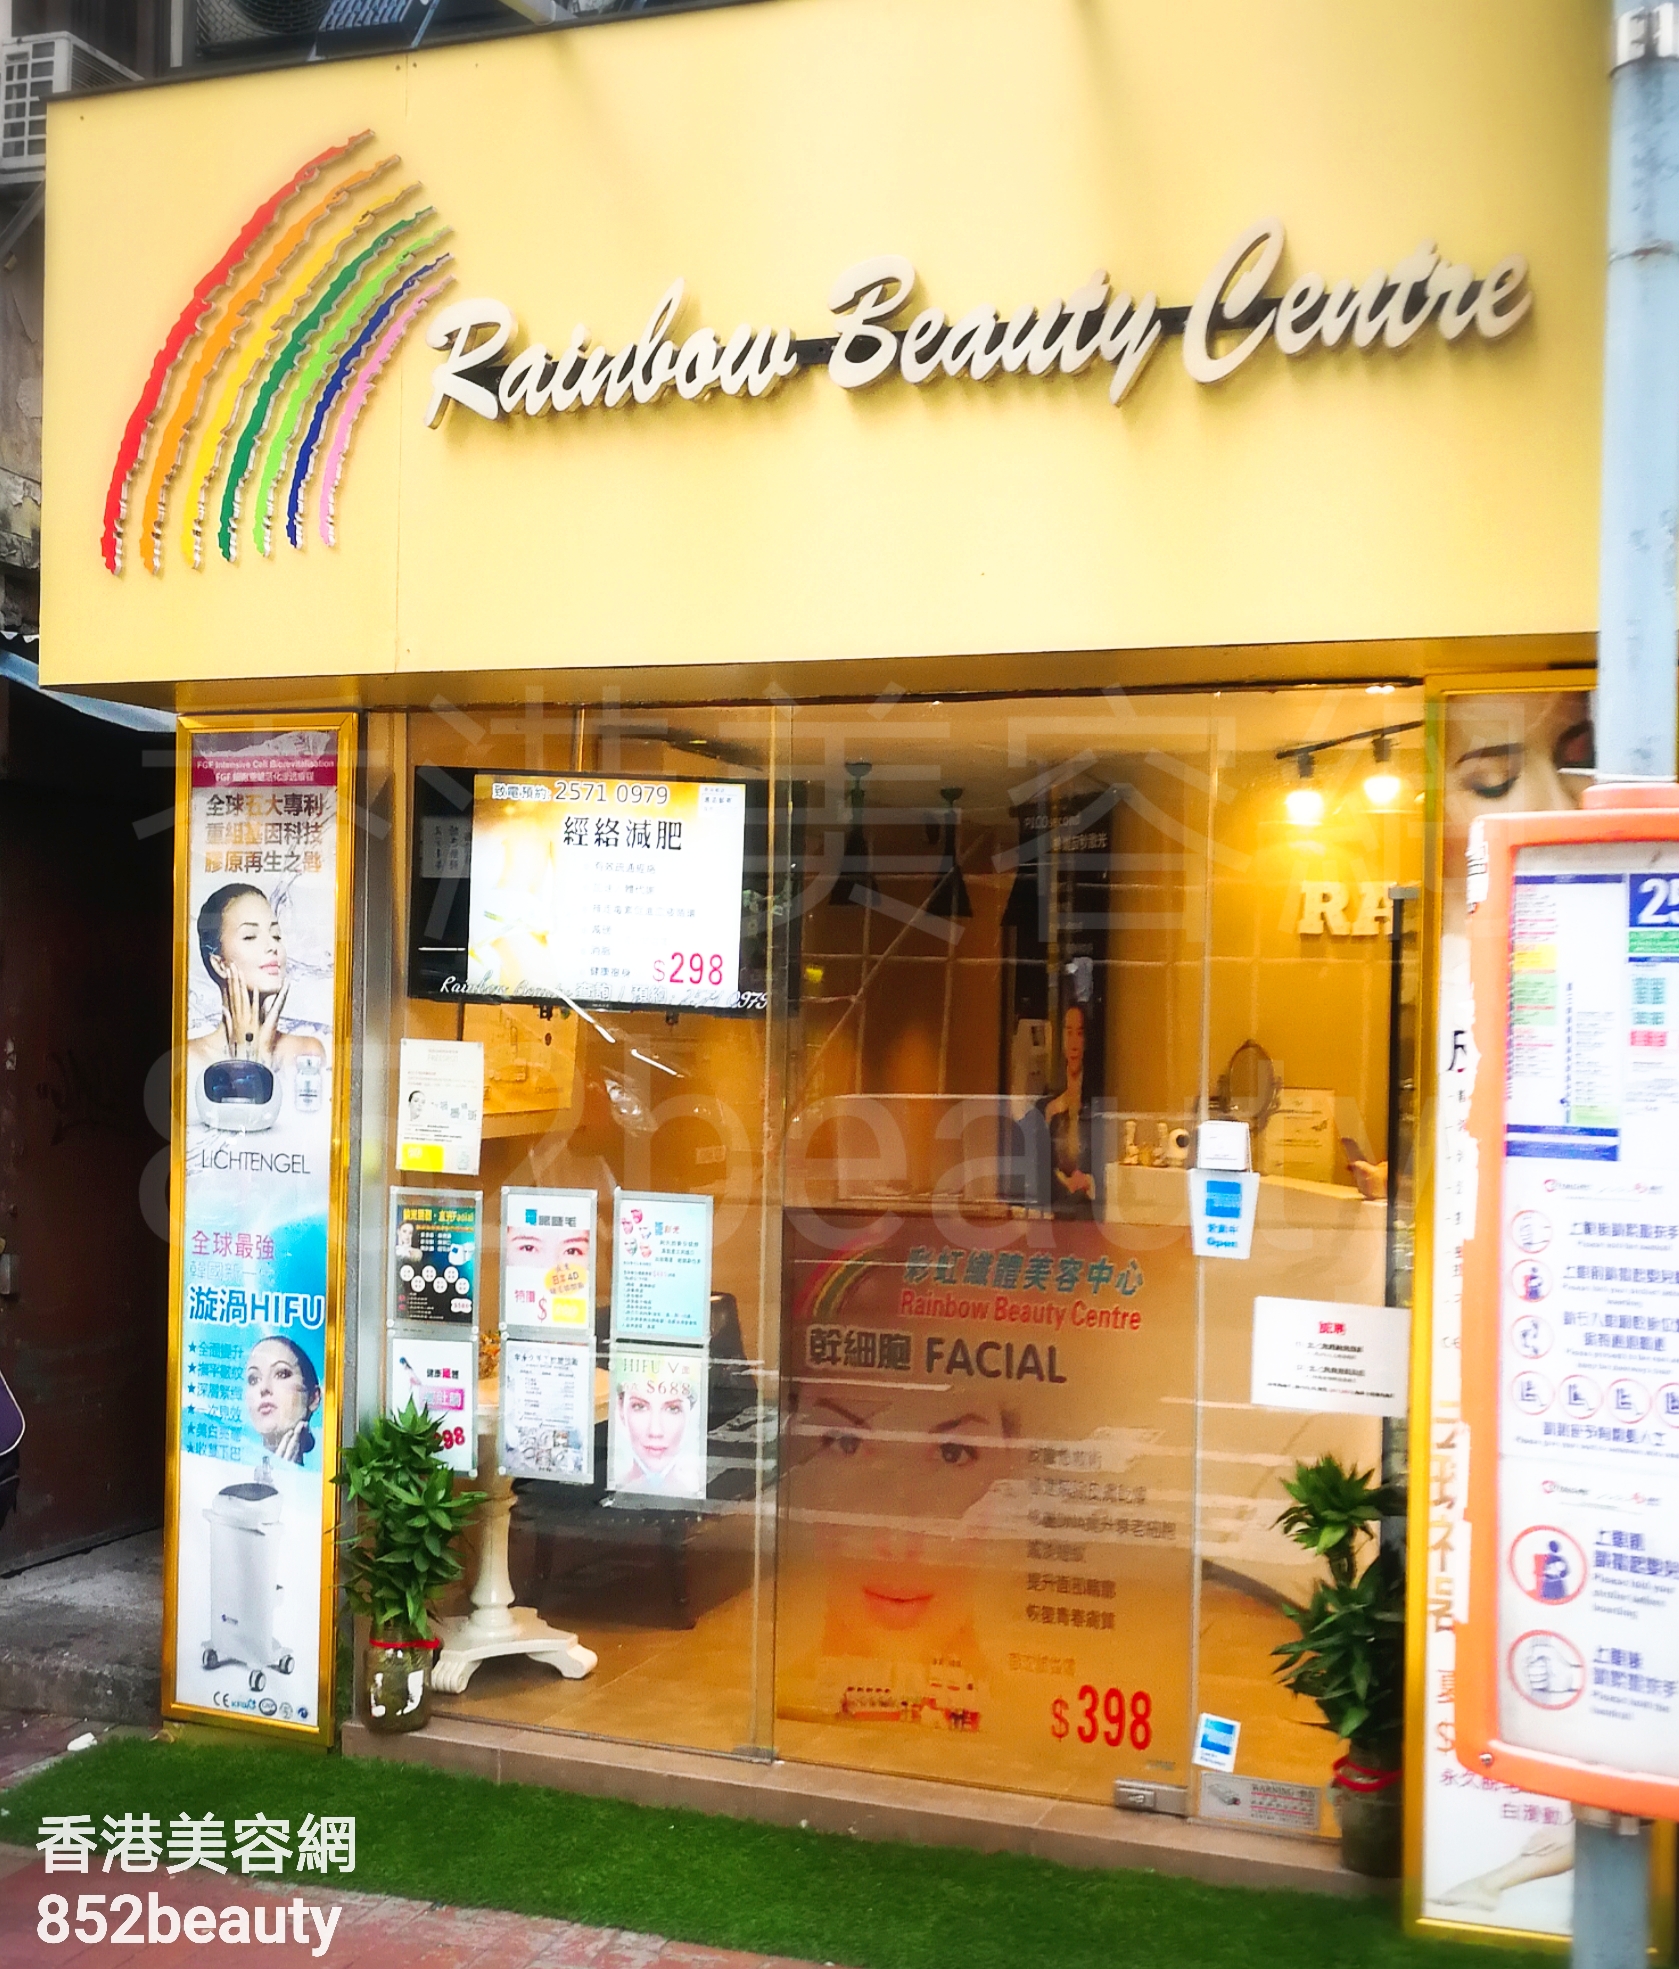 光学美容: Rainbow Beauty Centre